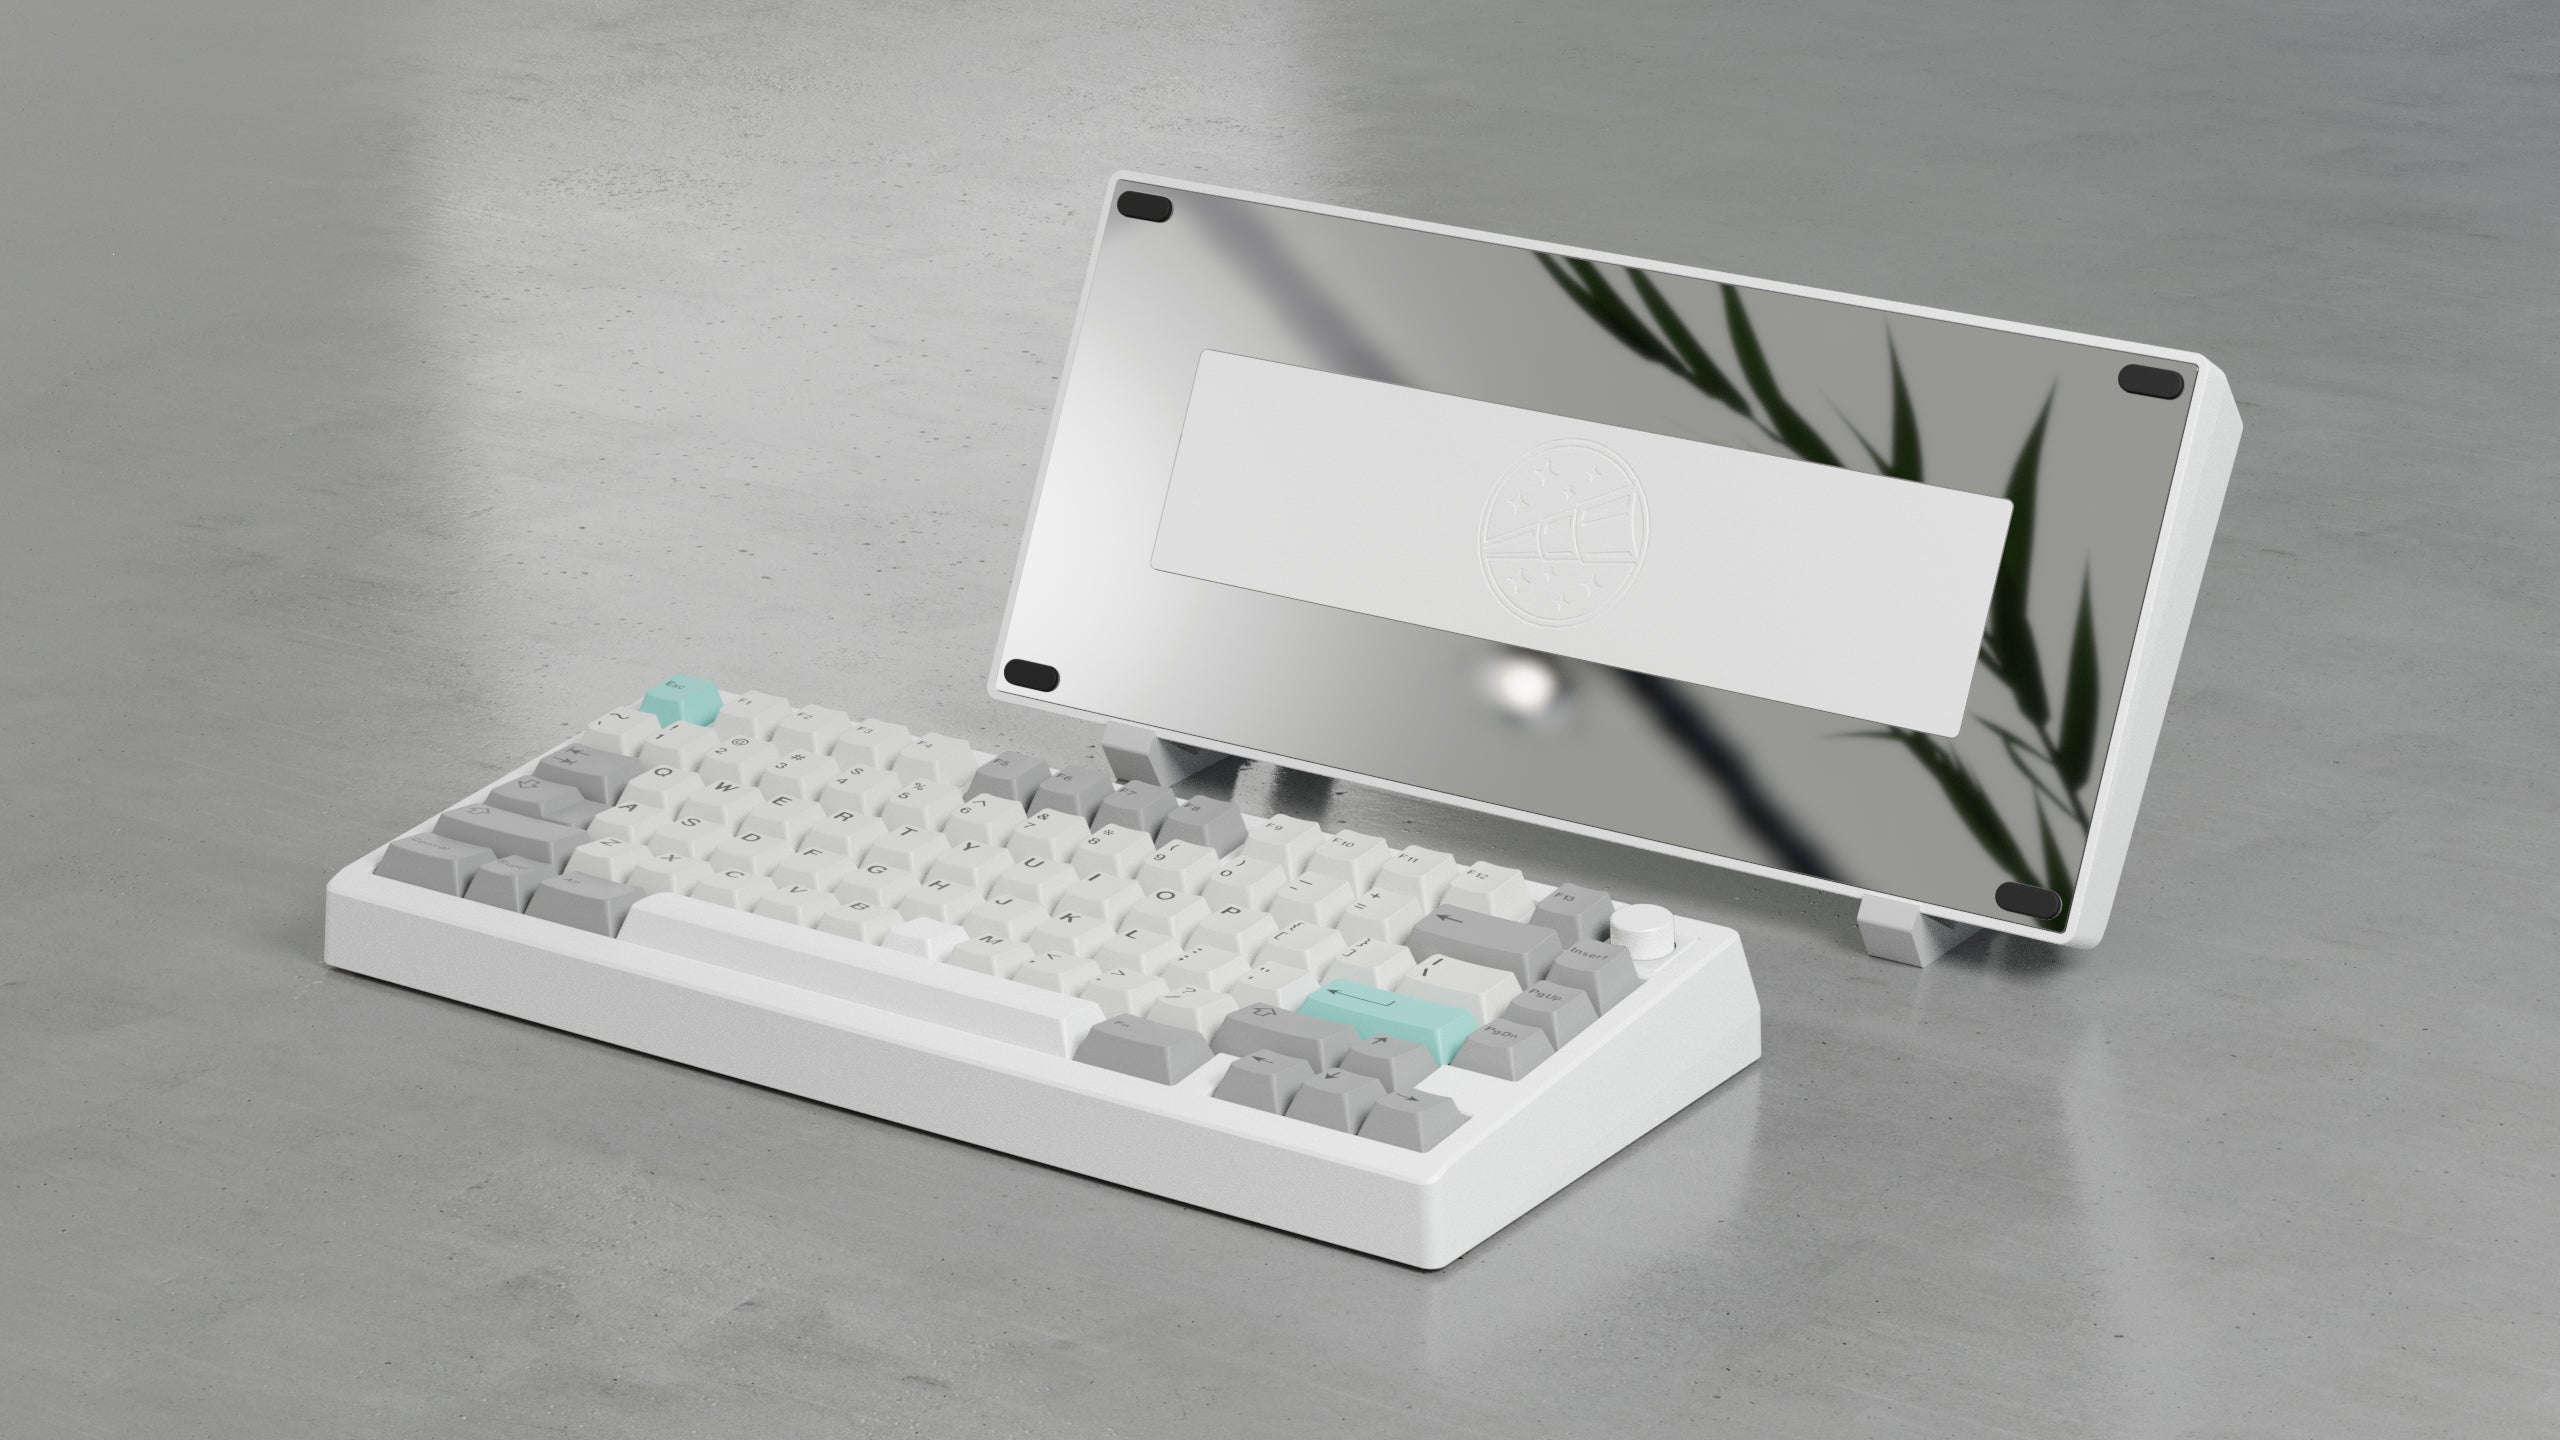 Zoom75 EE Keyboard - White [Preorder]